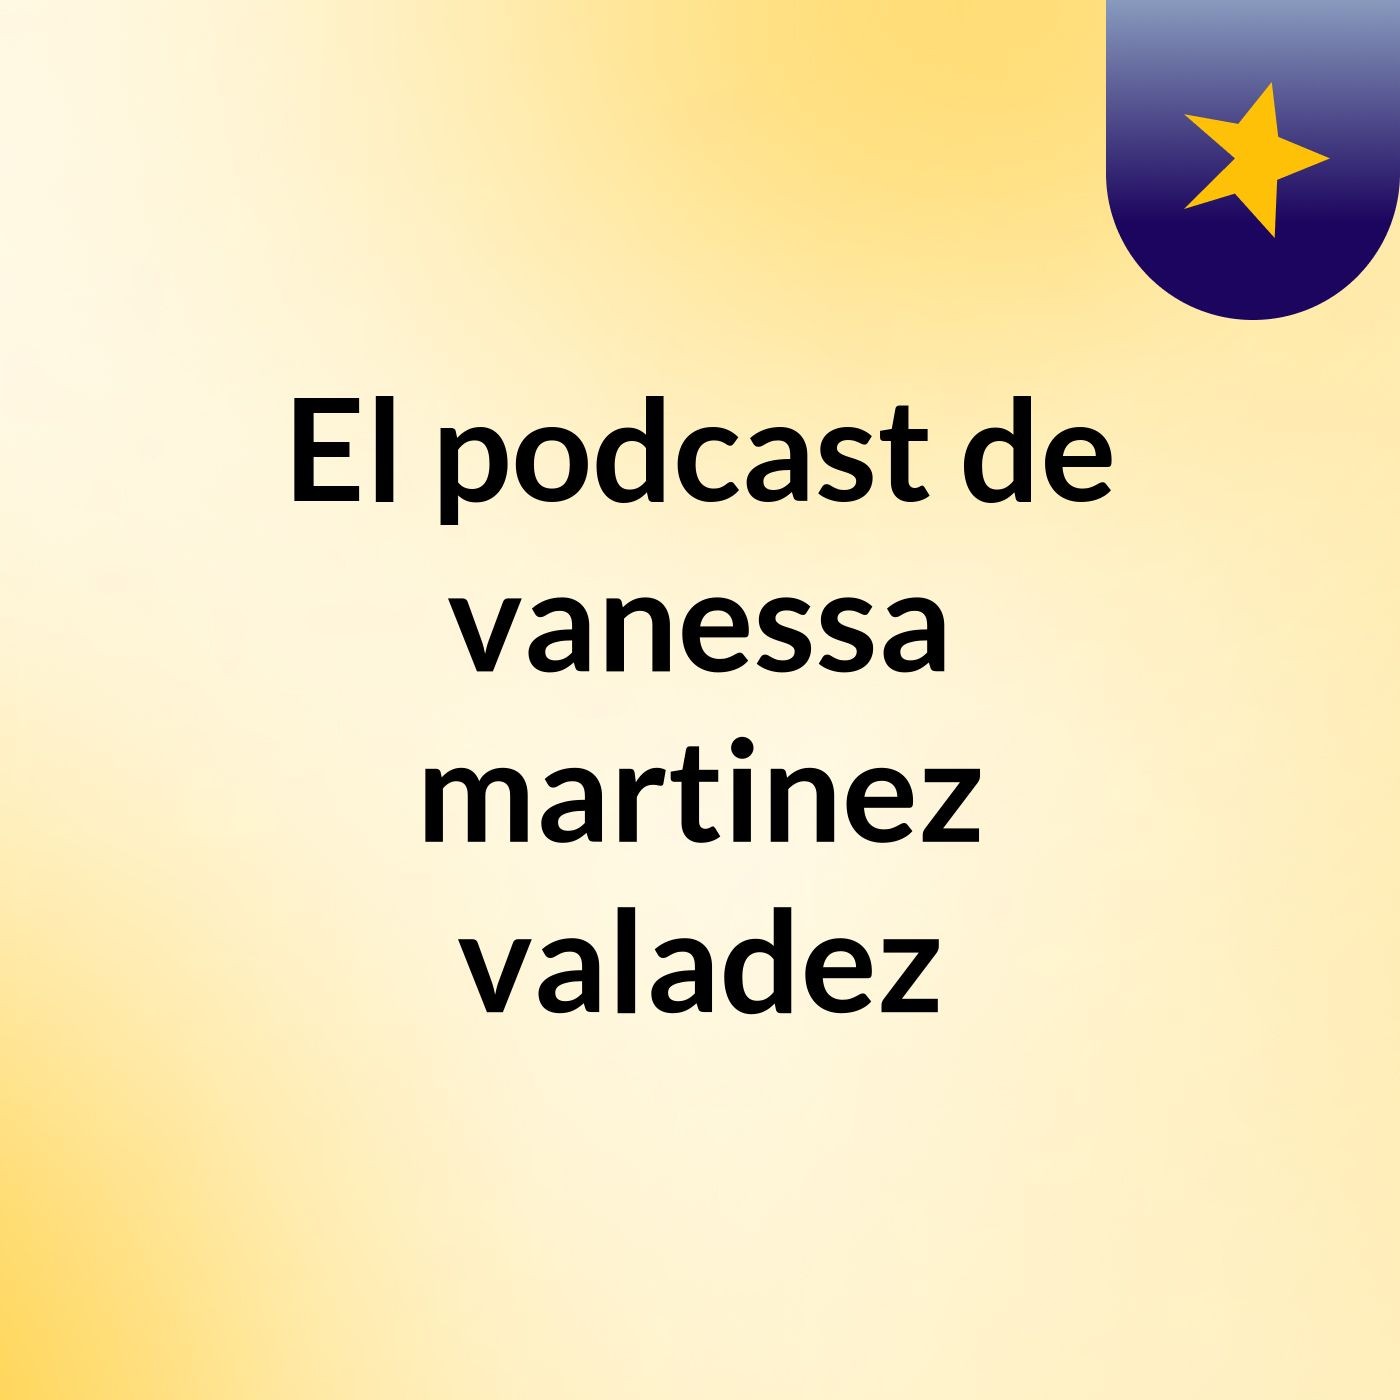 El podcast de vanessa martinez valadez